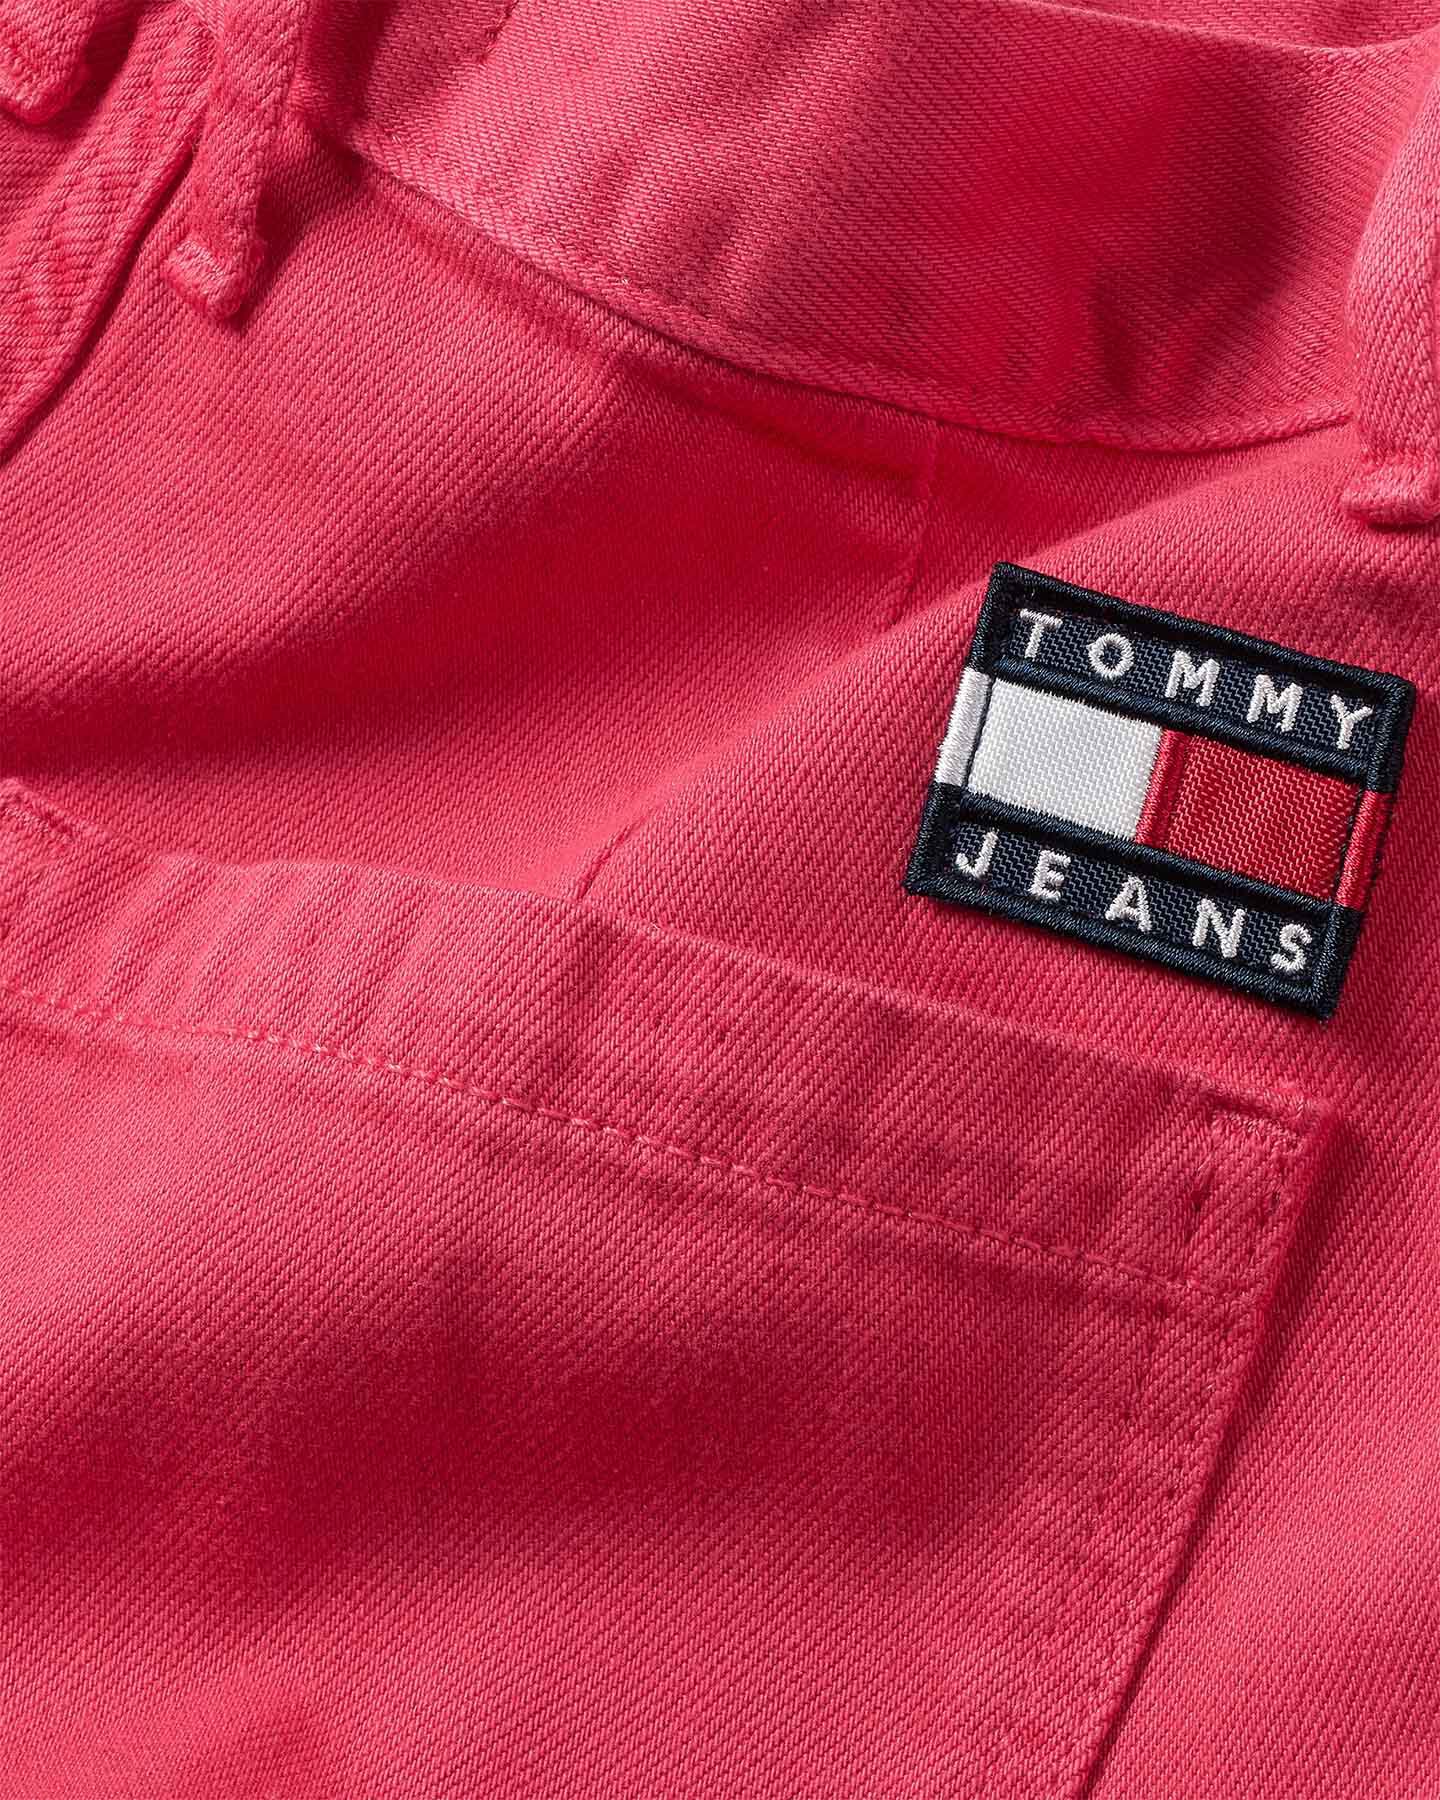  Jeans TOMMY HILFIGER HARPER W S4122996|TJN|26 scatto 2